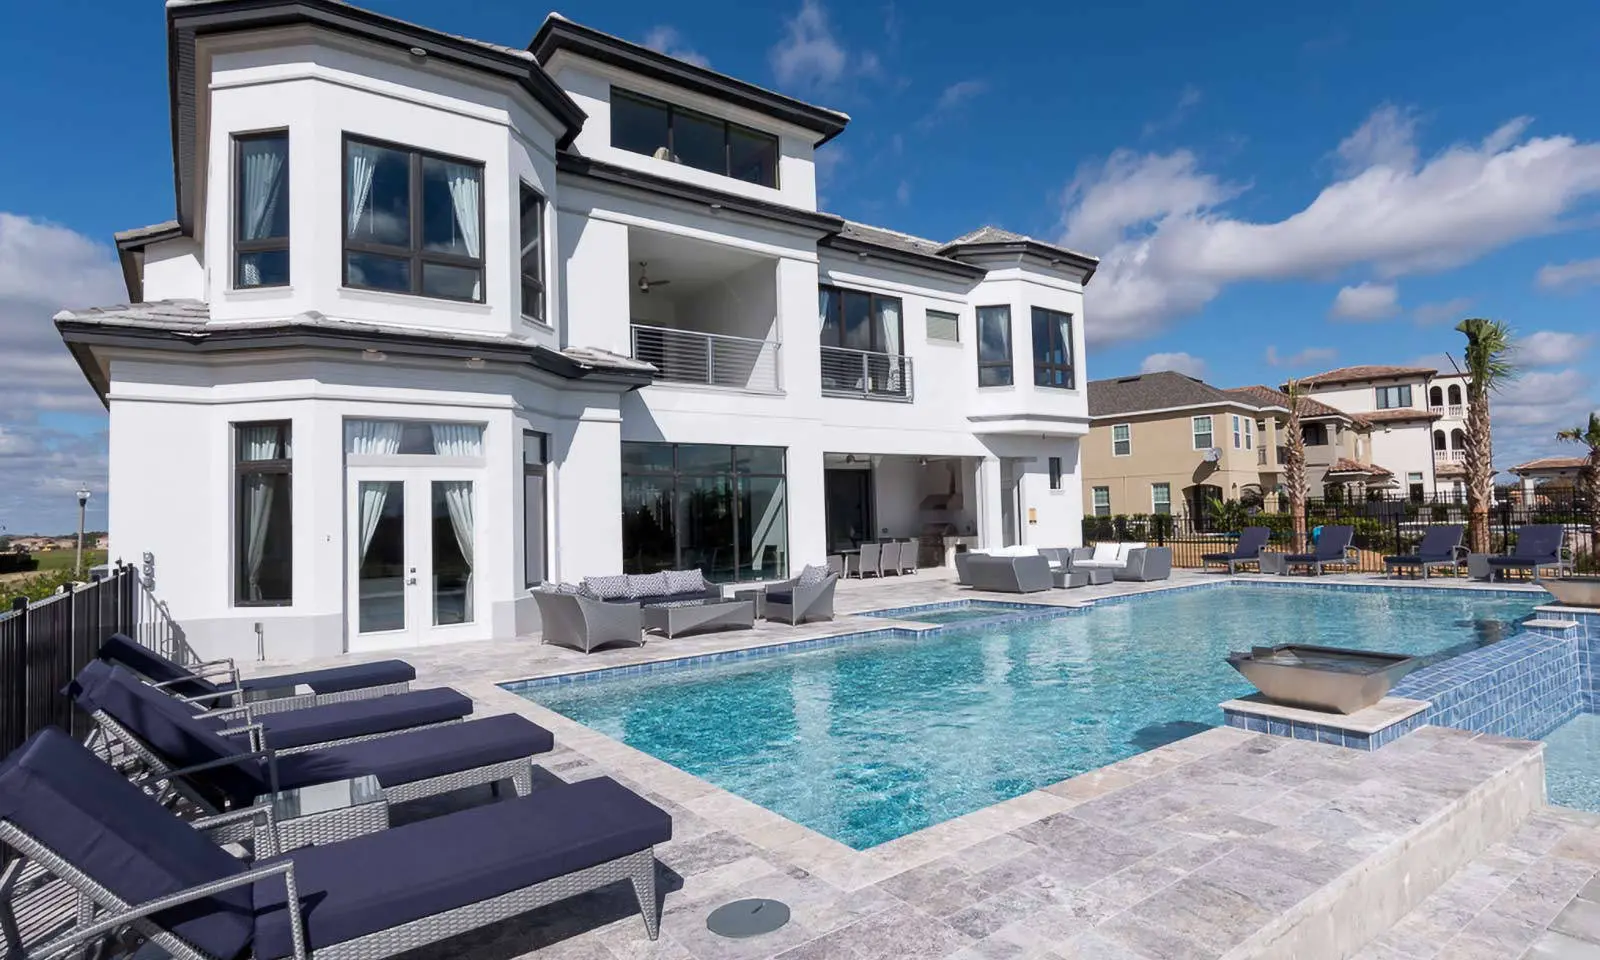 5 star Rental Orlando 11 bed luxury villa